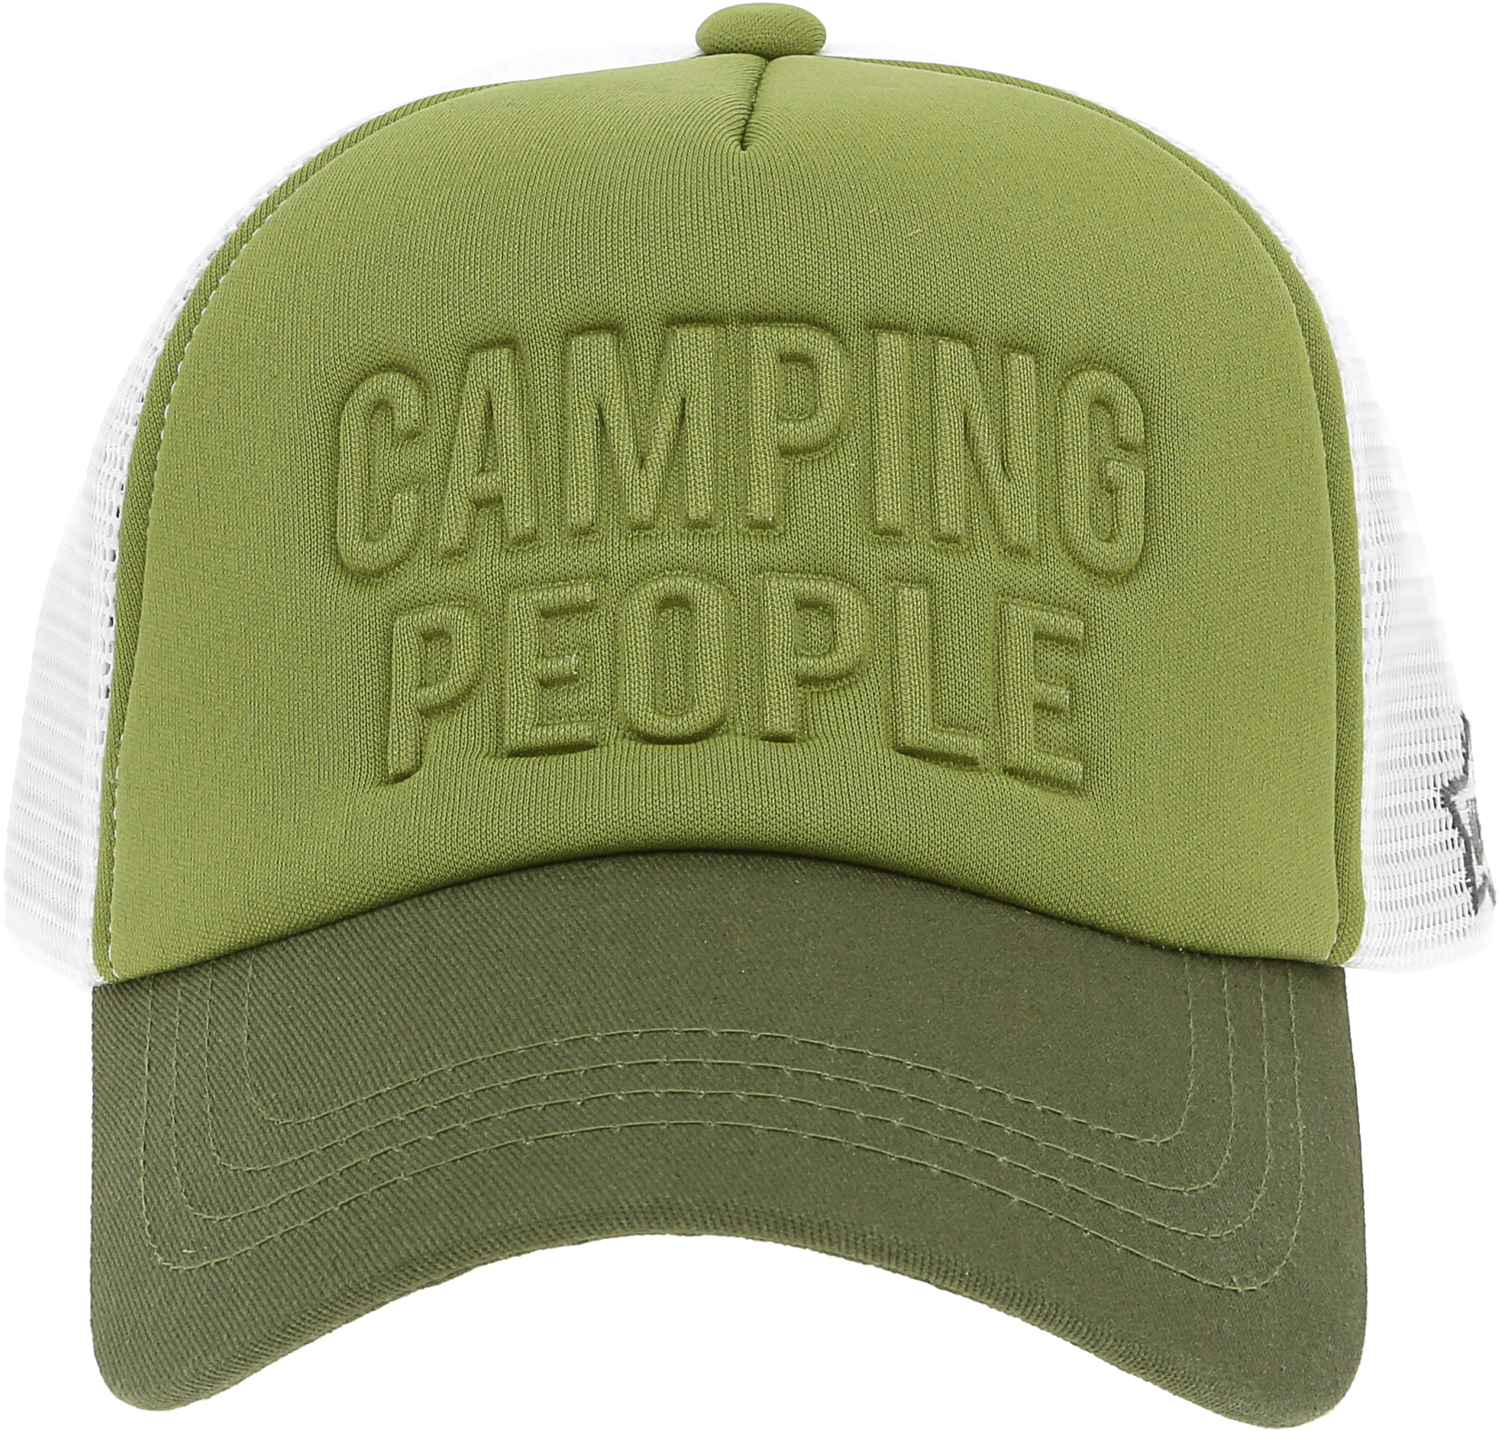 Camping People by We People - Camping People - Adjustable Moss Green Neoprene Mesh Hat